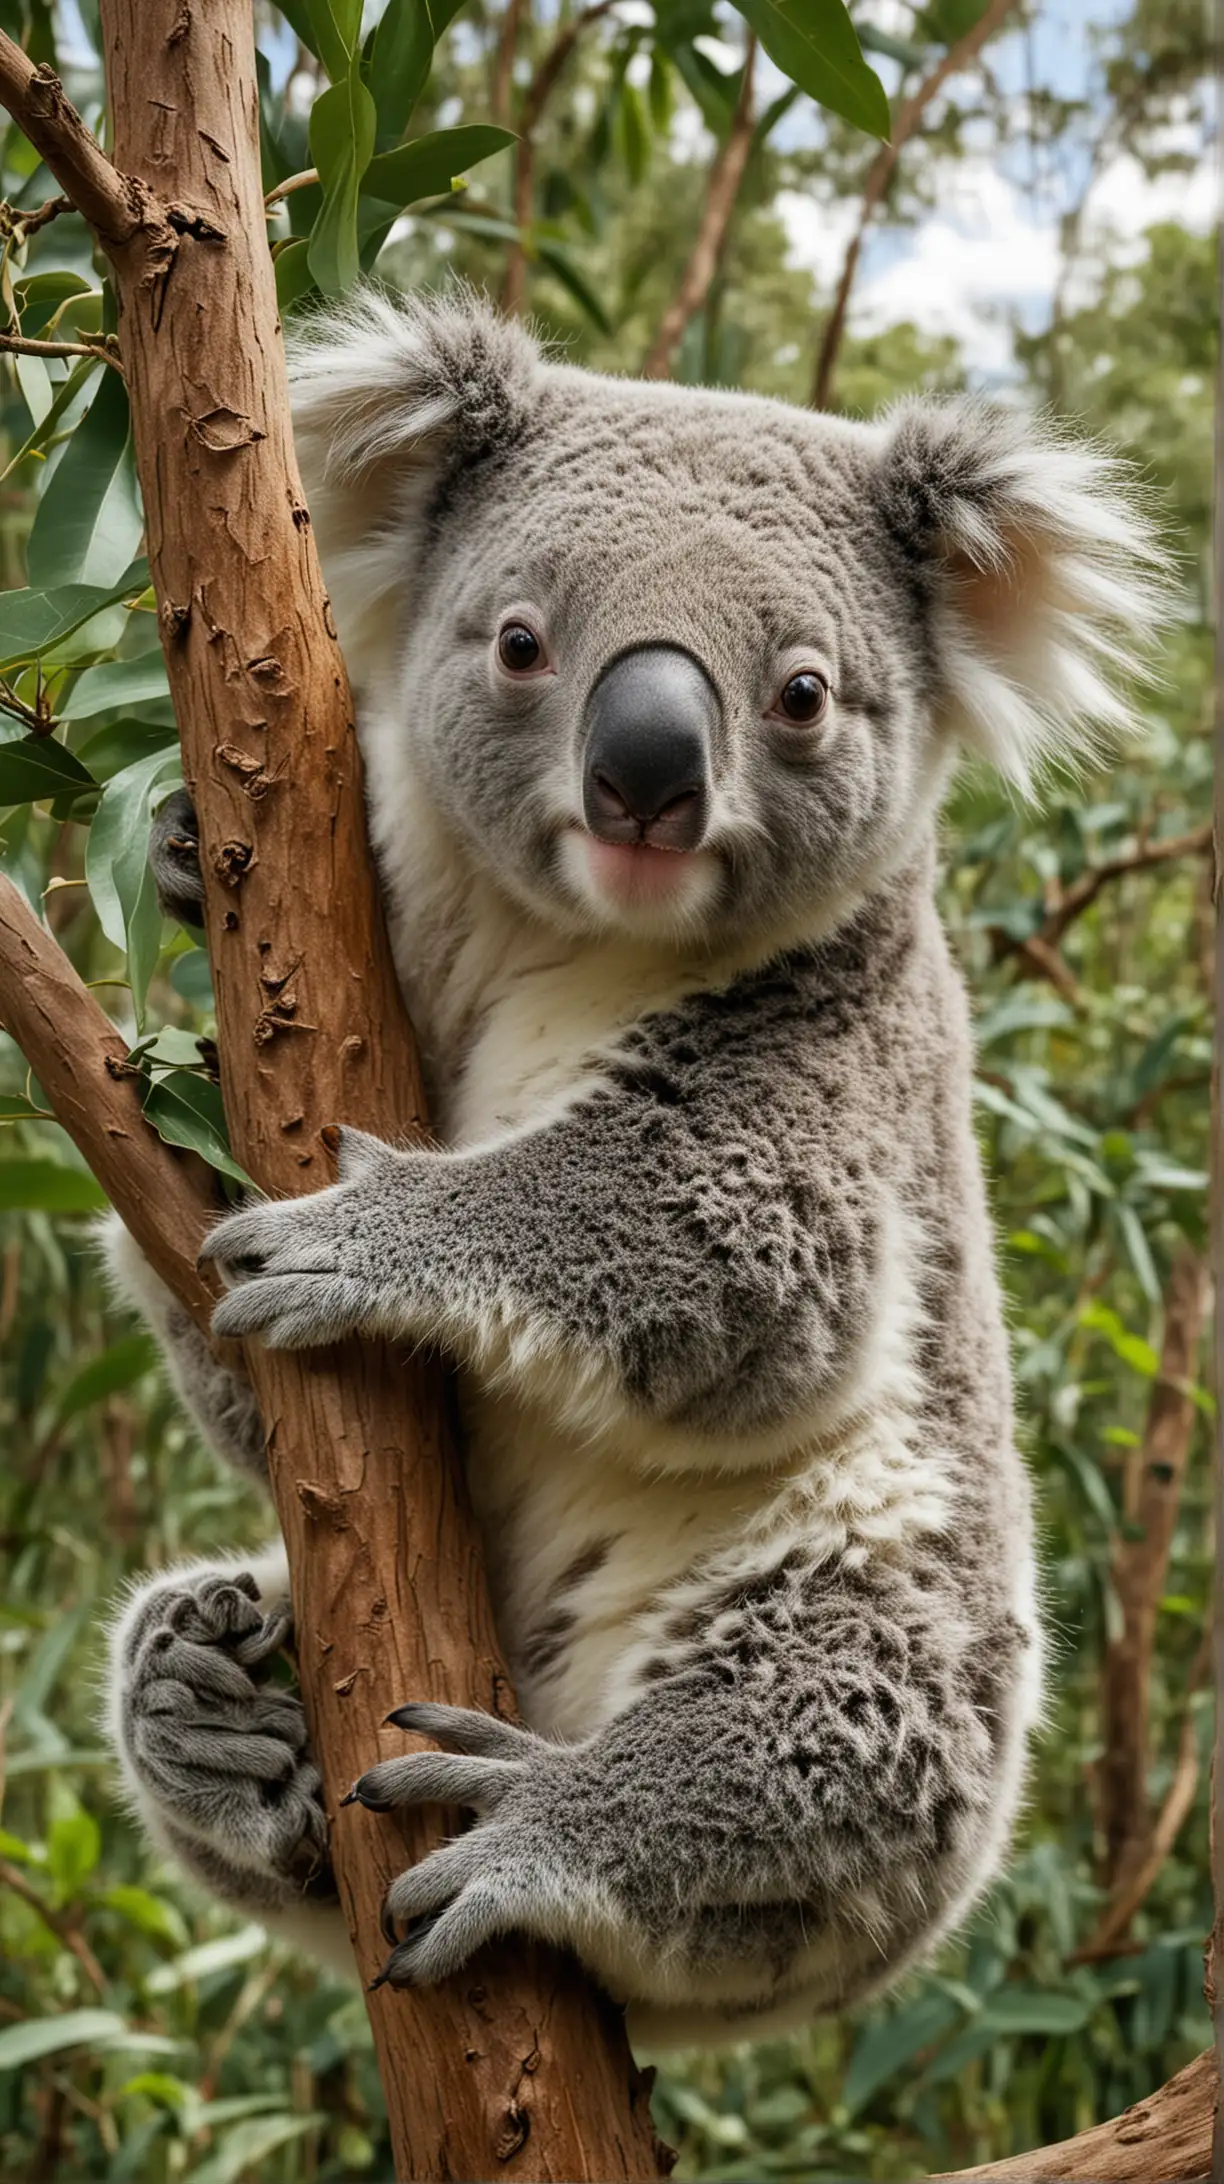 Full Body Koala Portrait on Tree Branch with Lush Green Background